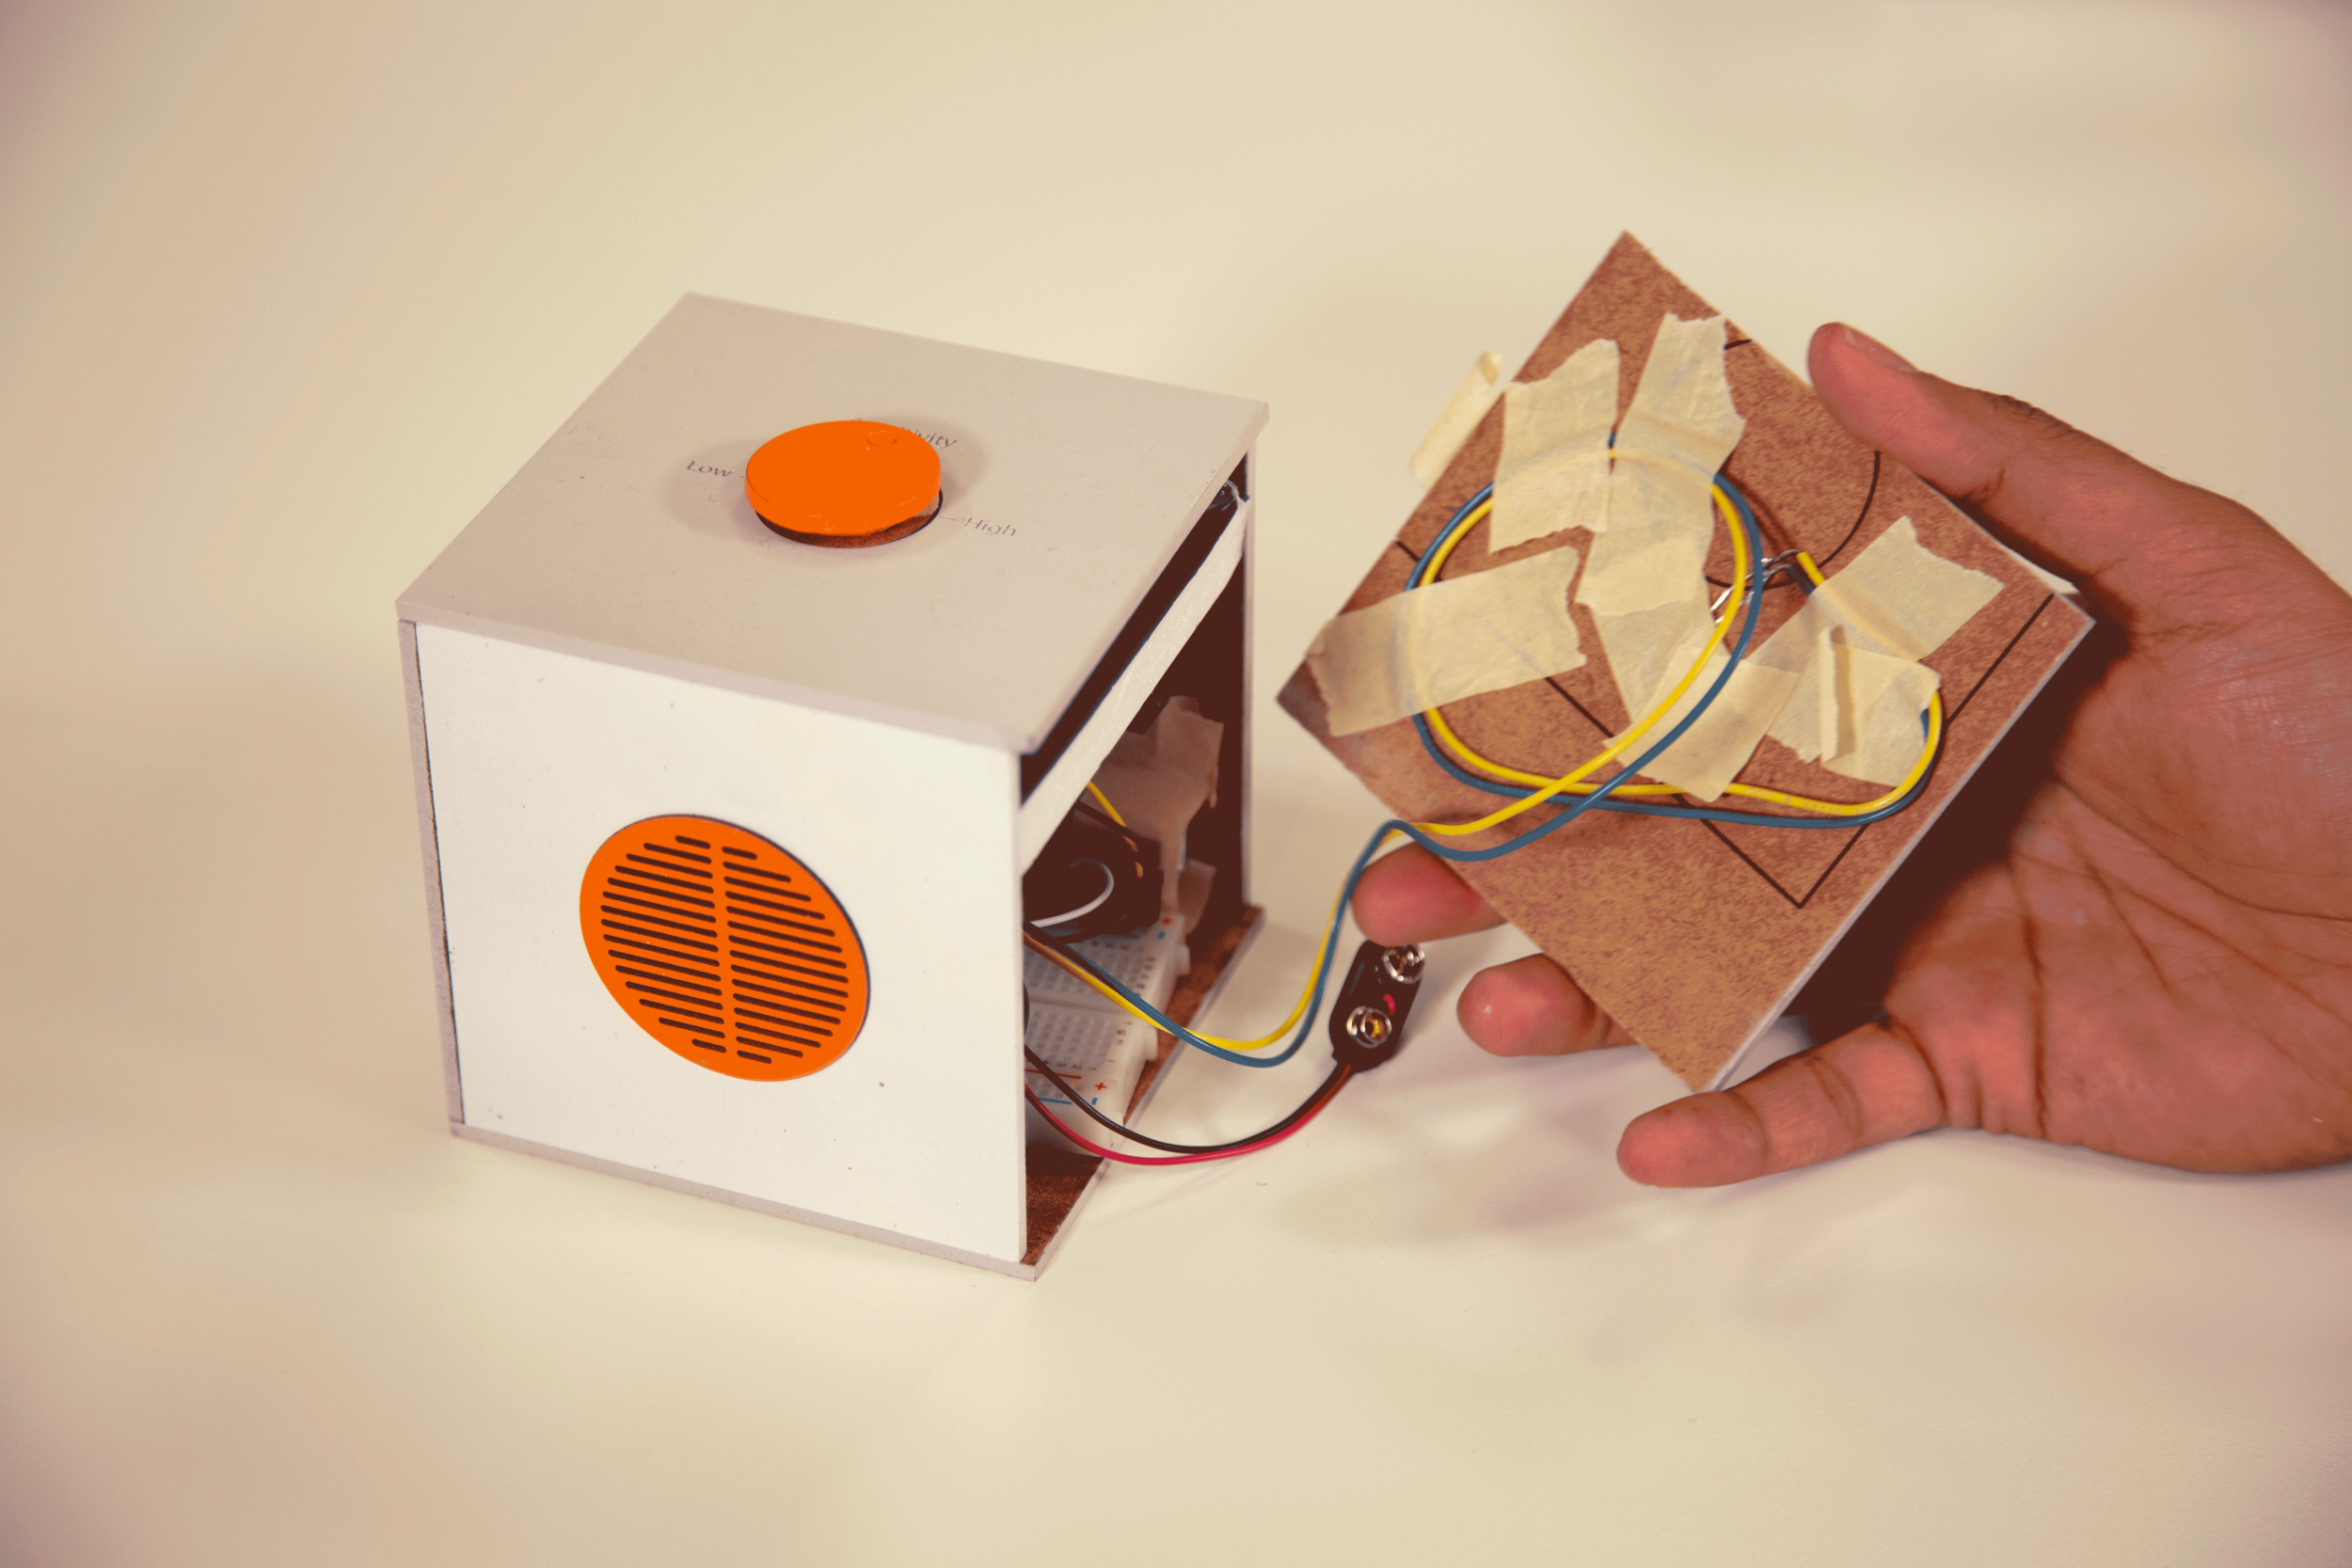  First prototype: Sound sensor with sensitivity setting 